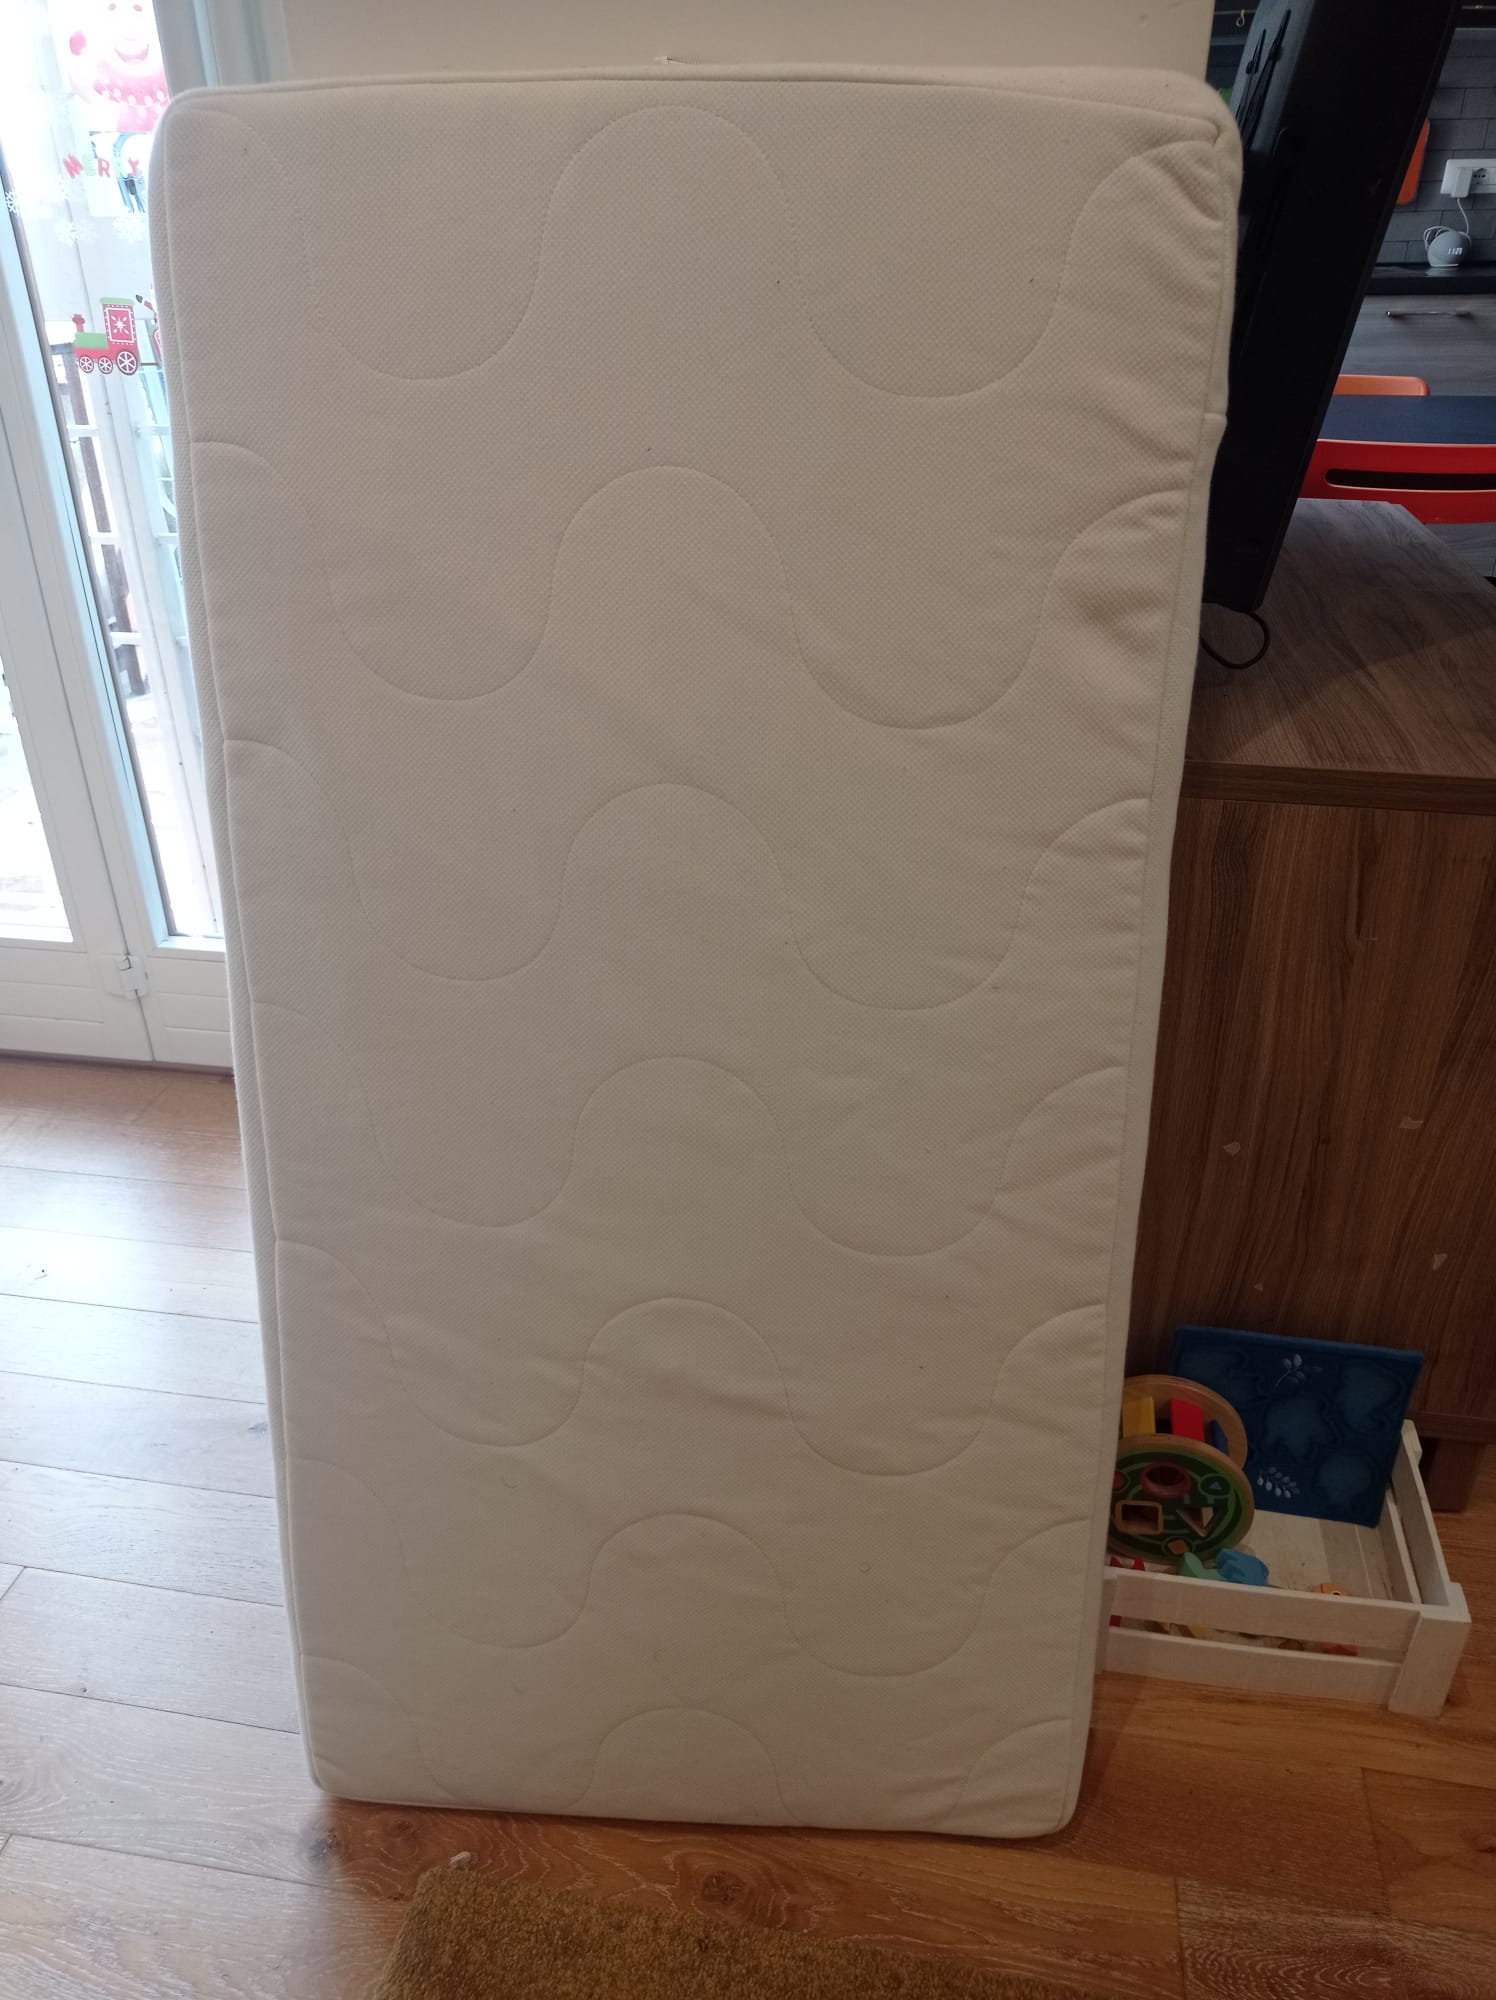 KRUMMELUR Materasso in schiuma per lettino, 60x120x8 cm - IKEA Italia